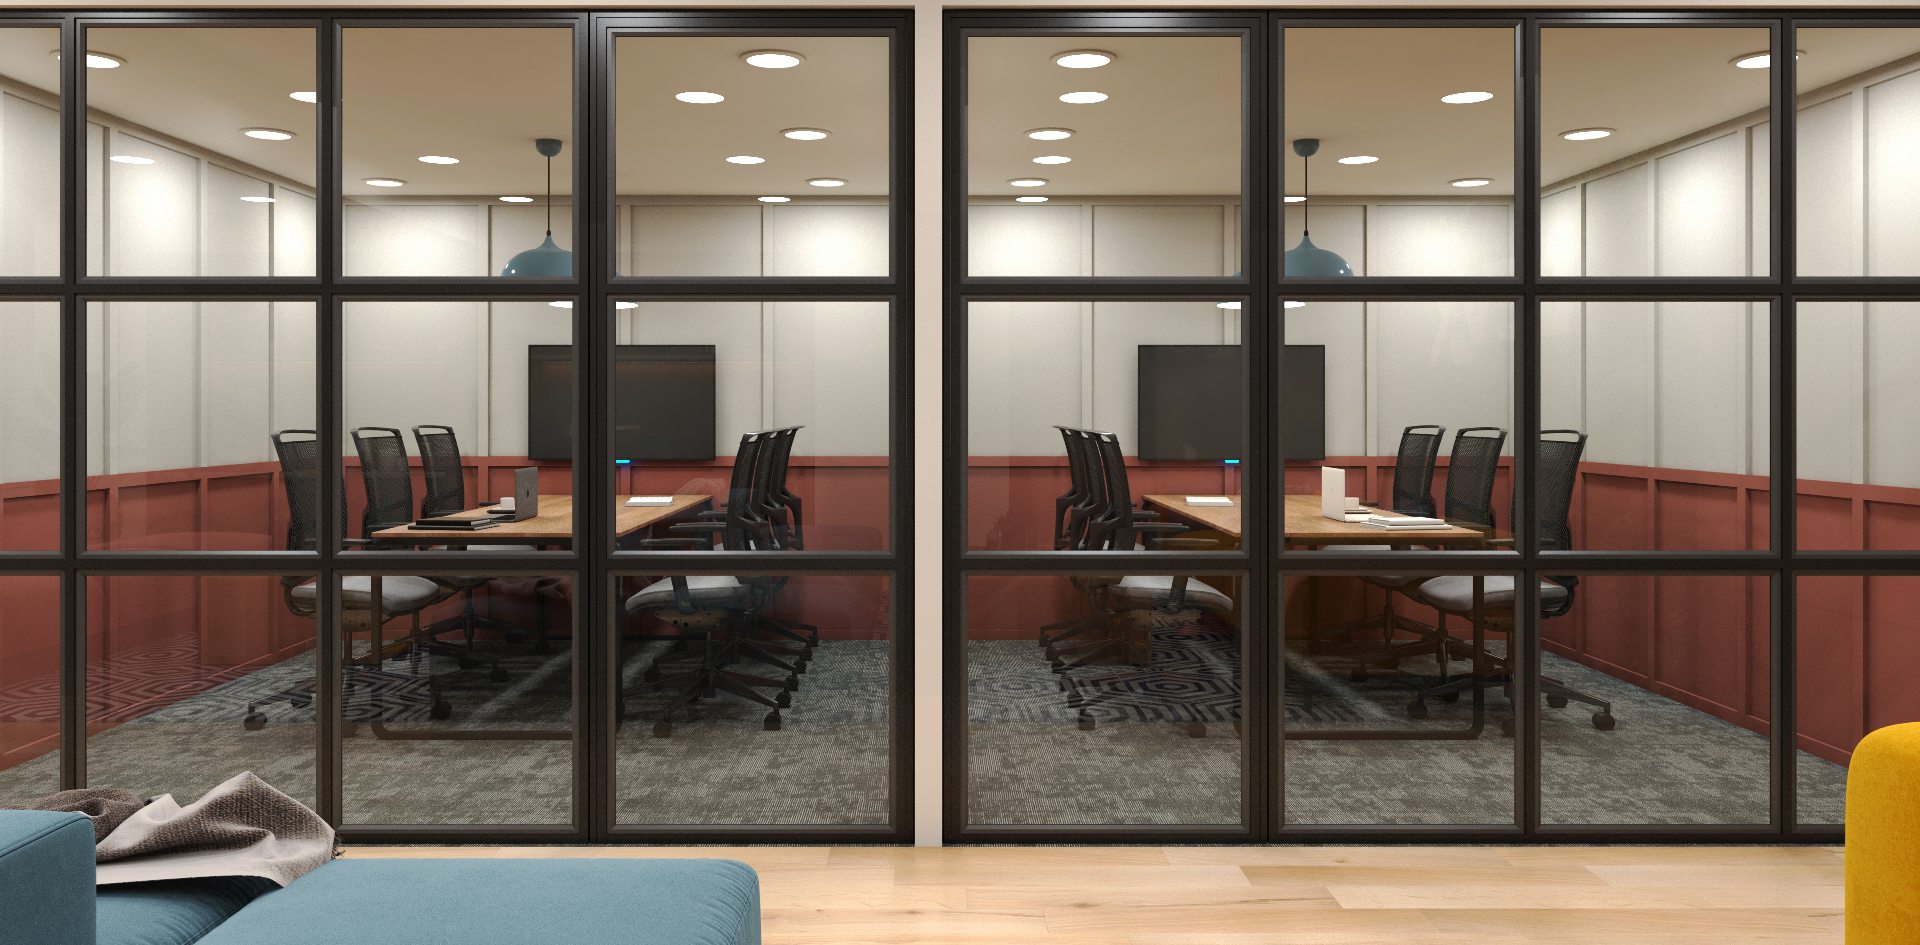 Top 10 Office Interior Design Concepts for a Contemporary Look - DevX